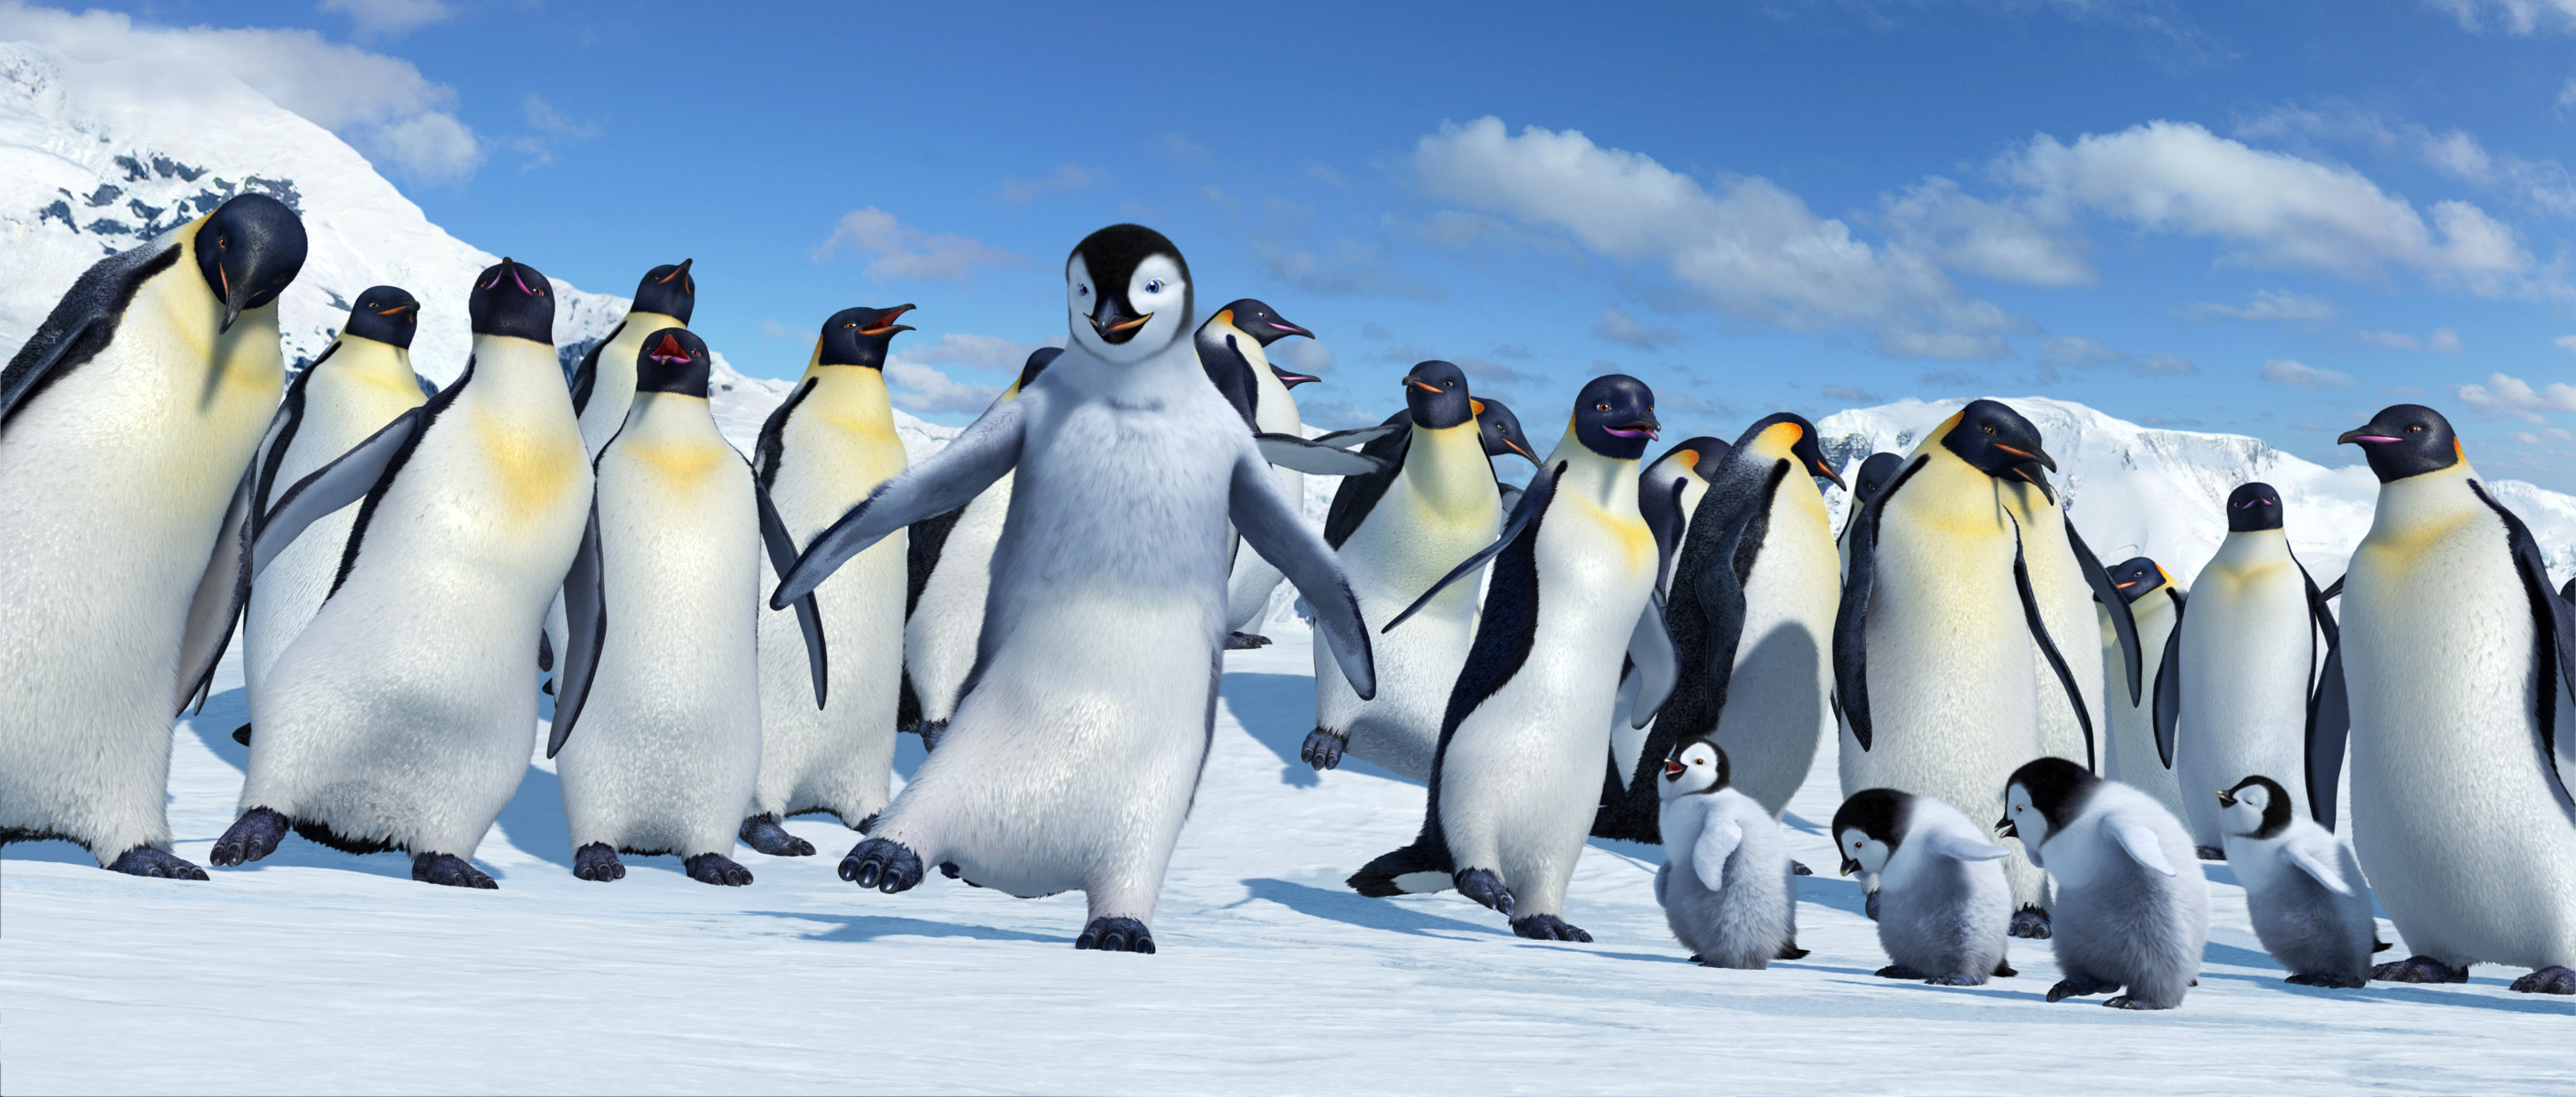 Happy Feet, Adorable penguins, High-quality image, Vibrant colors, 2820x1200 Dual Screen Desktop